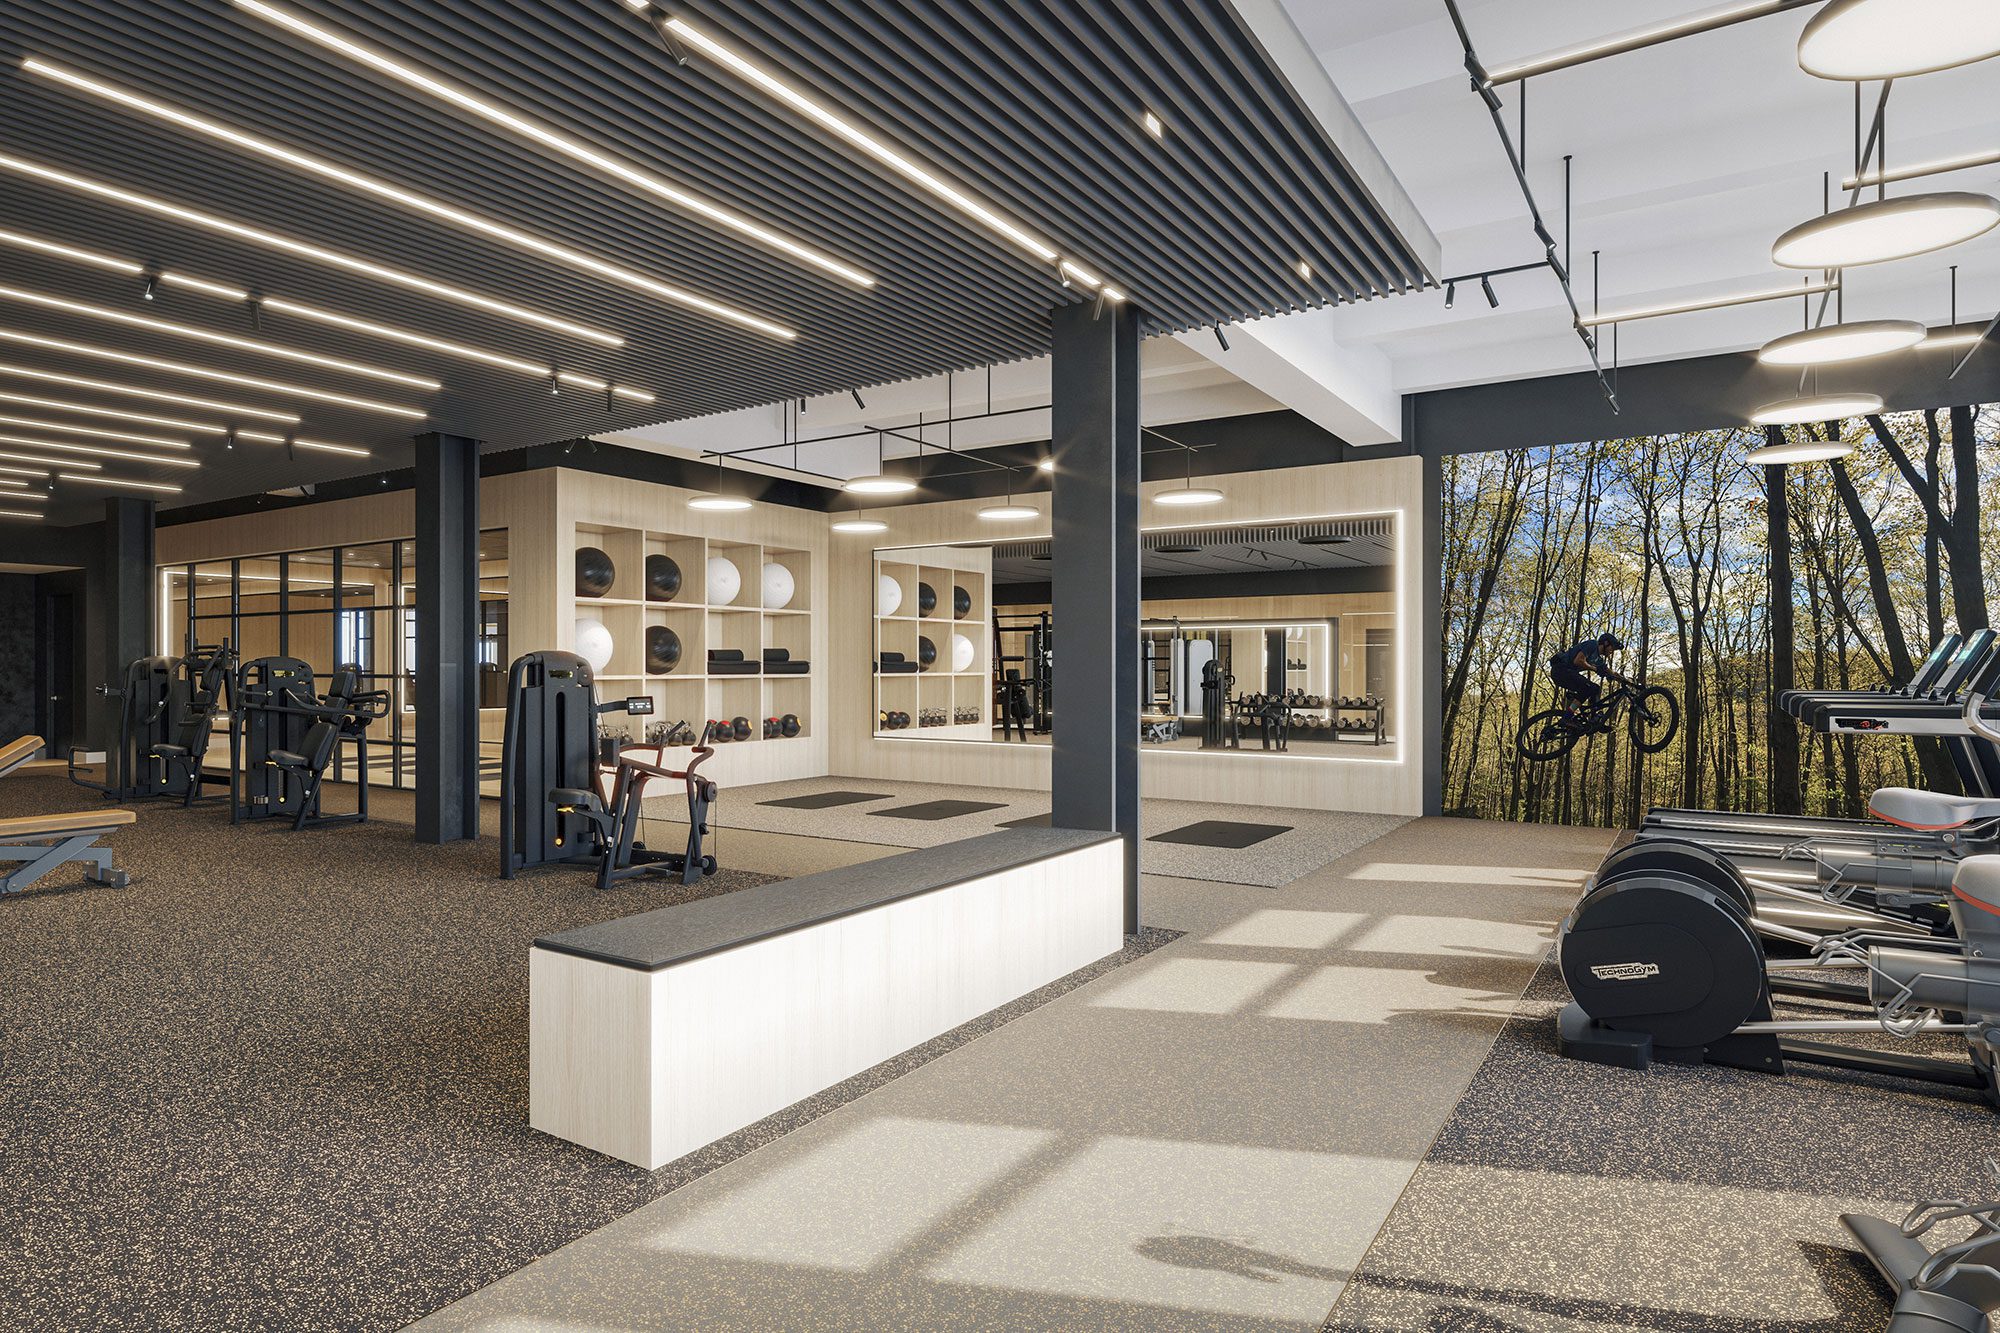 A full sized modern tenant fitness center with modern lighting